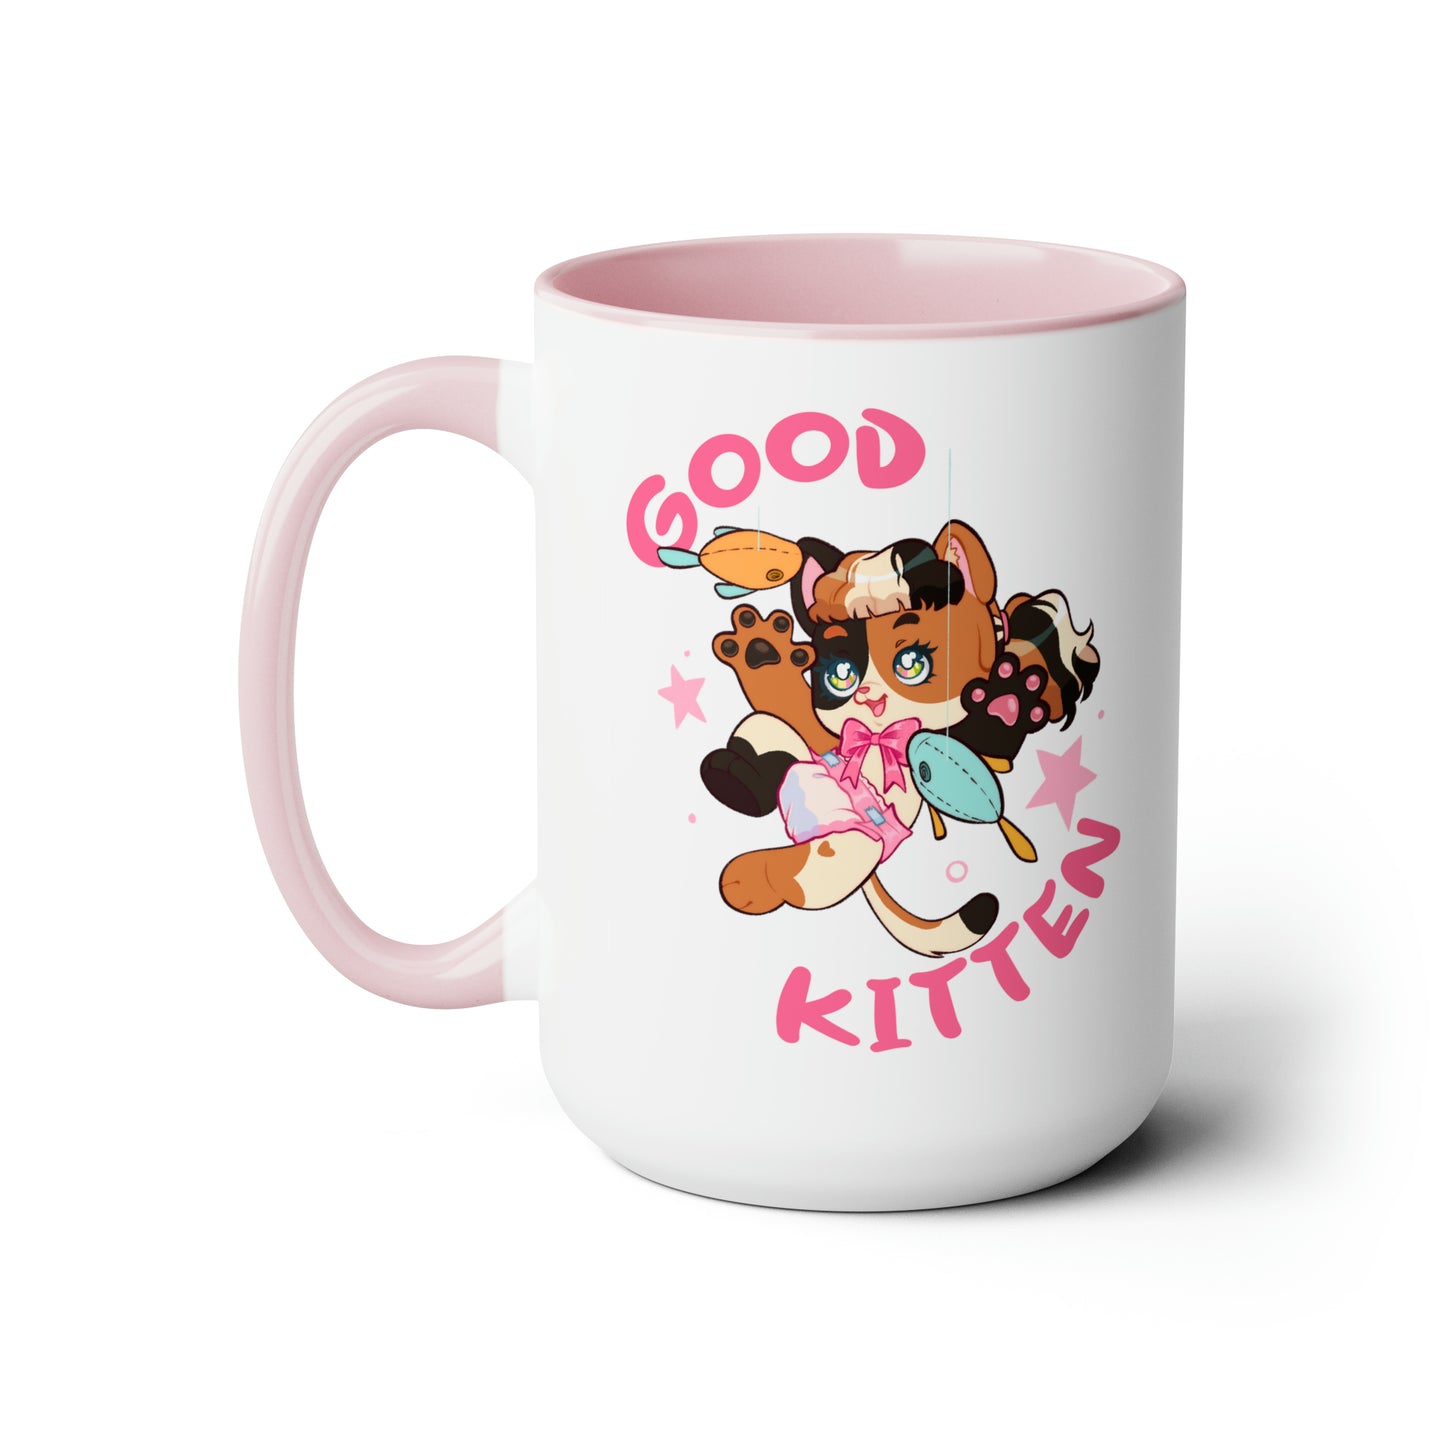 Good Kitten, Playful Two-Tone Mugs, 15oz